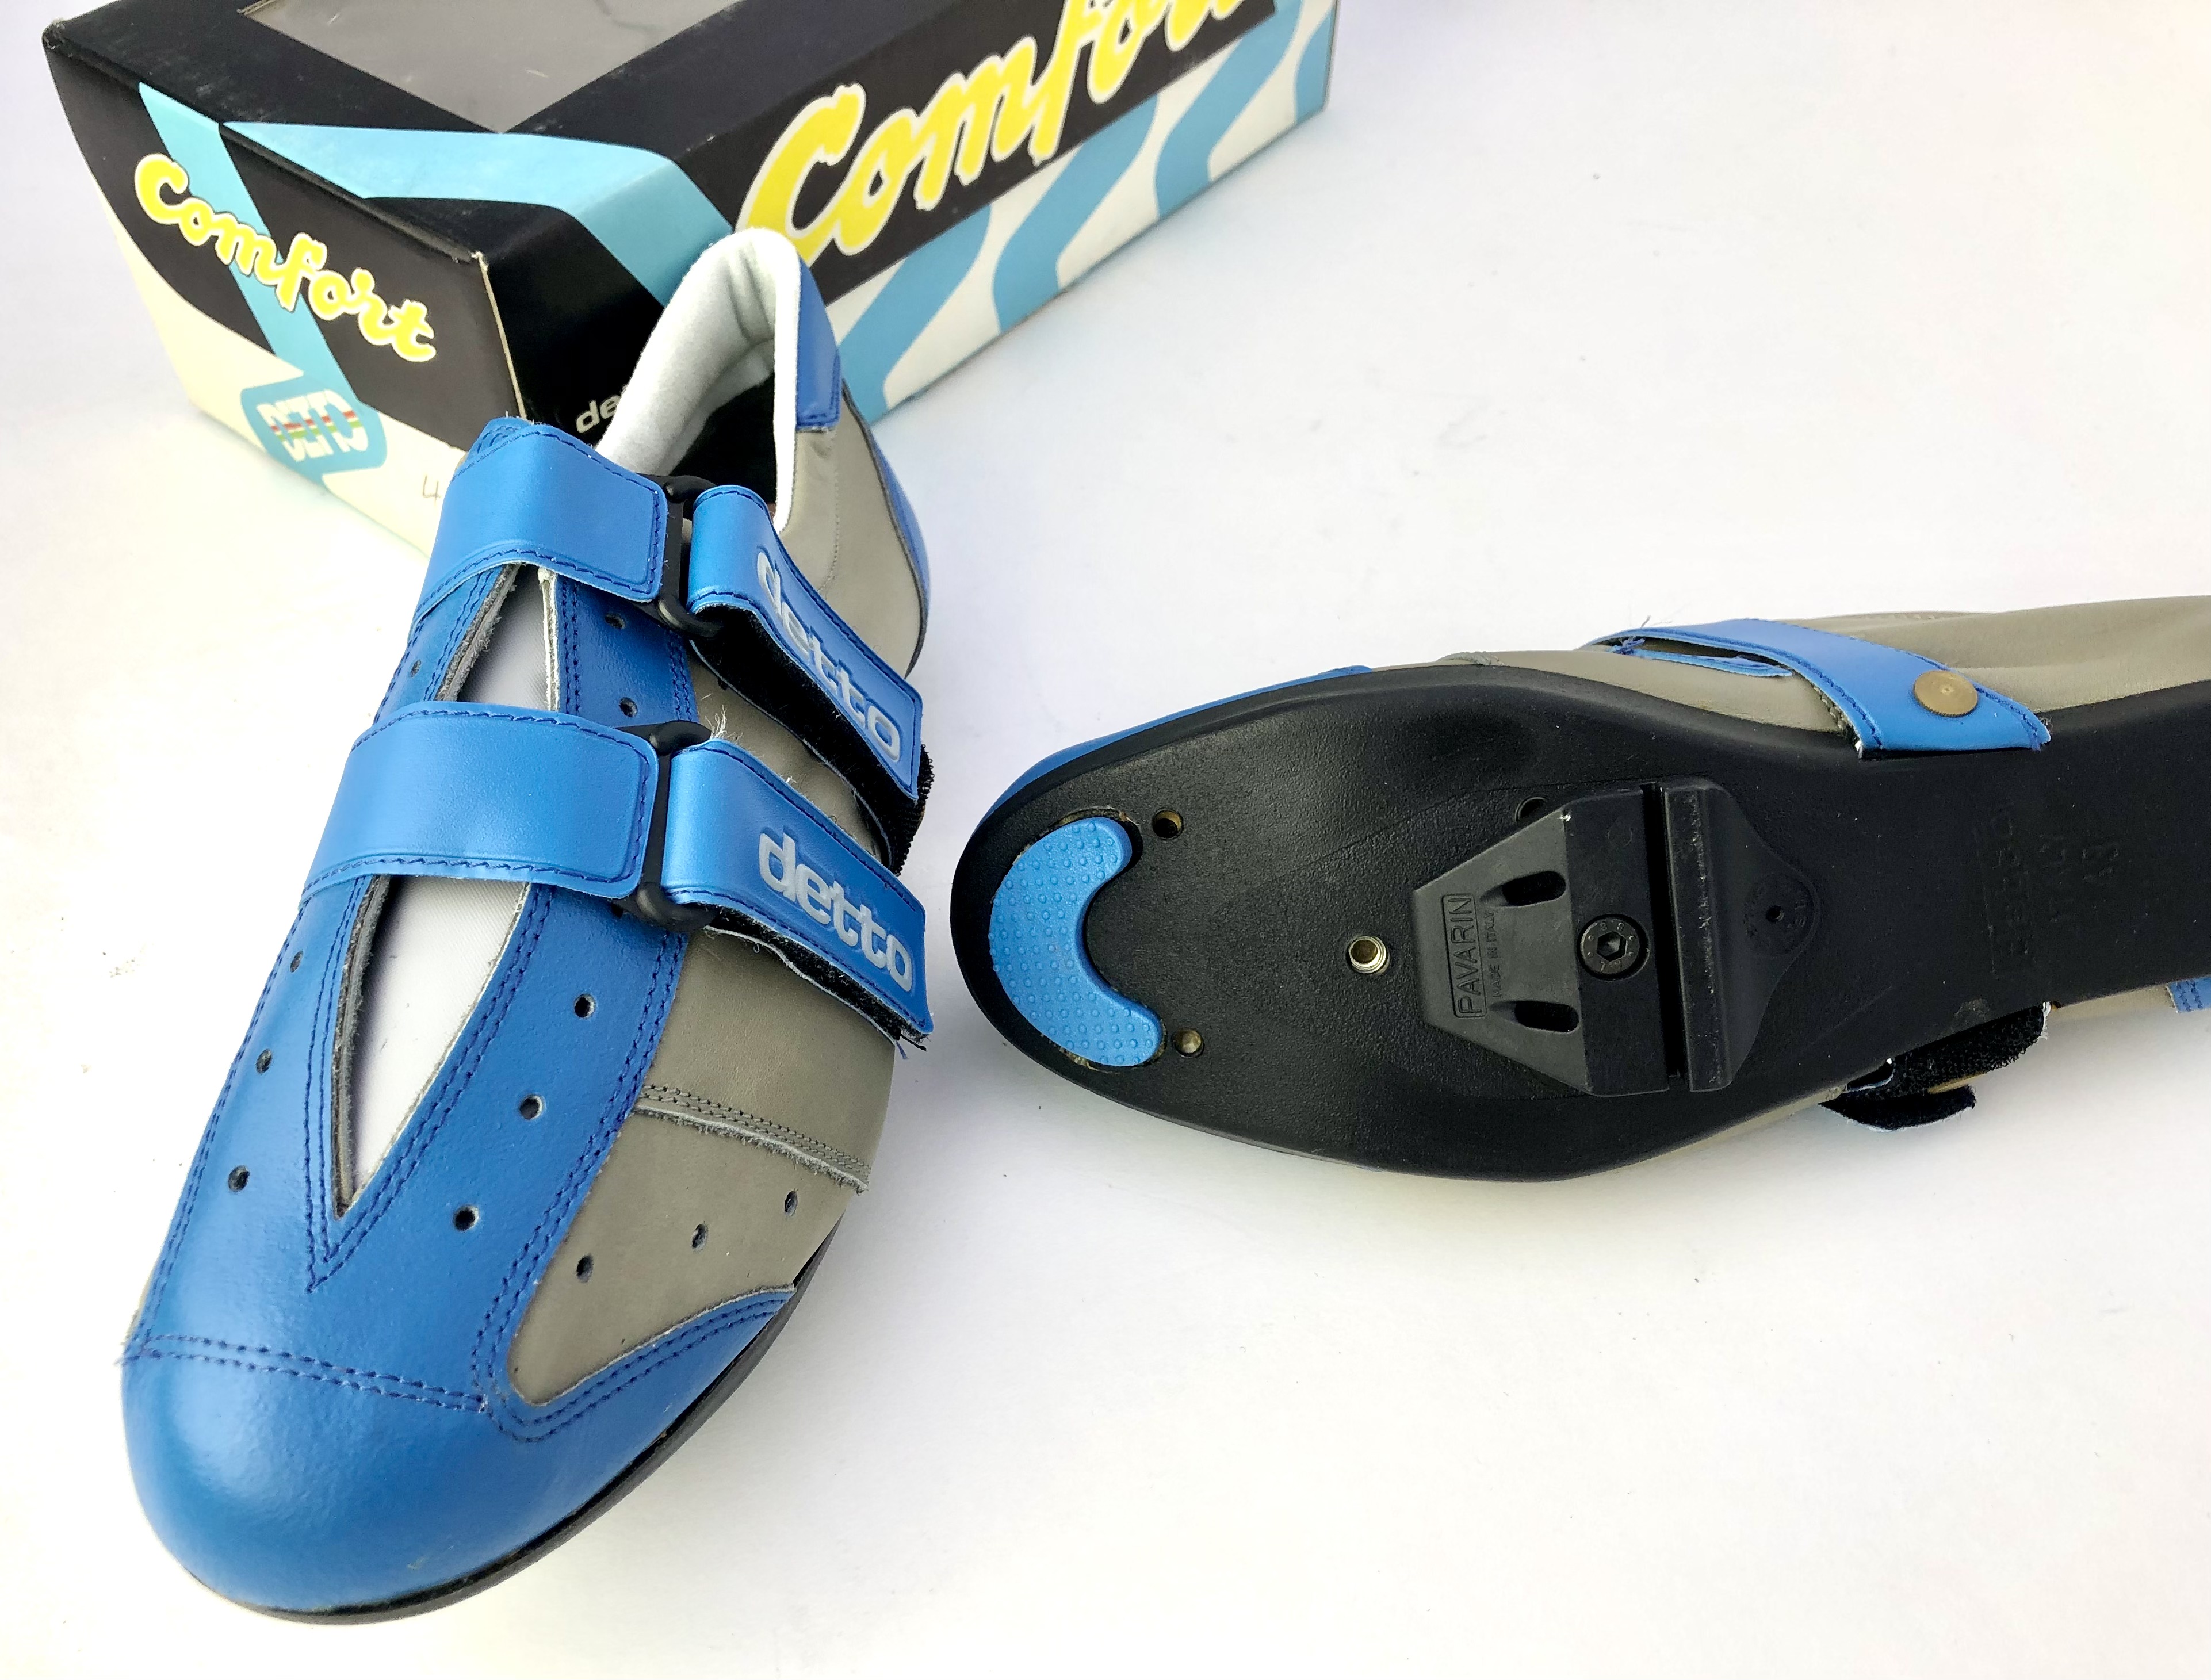 NOS Vintage Detto Pietro Mod. 230 Comfort Blu Cycling Shoes Size 39